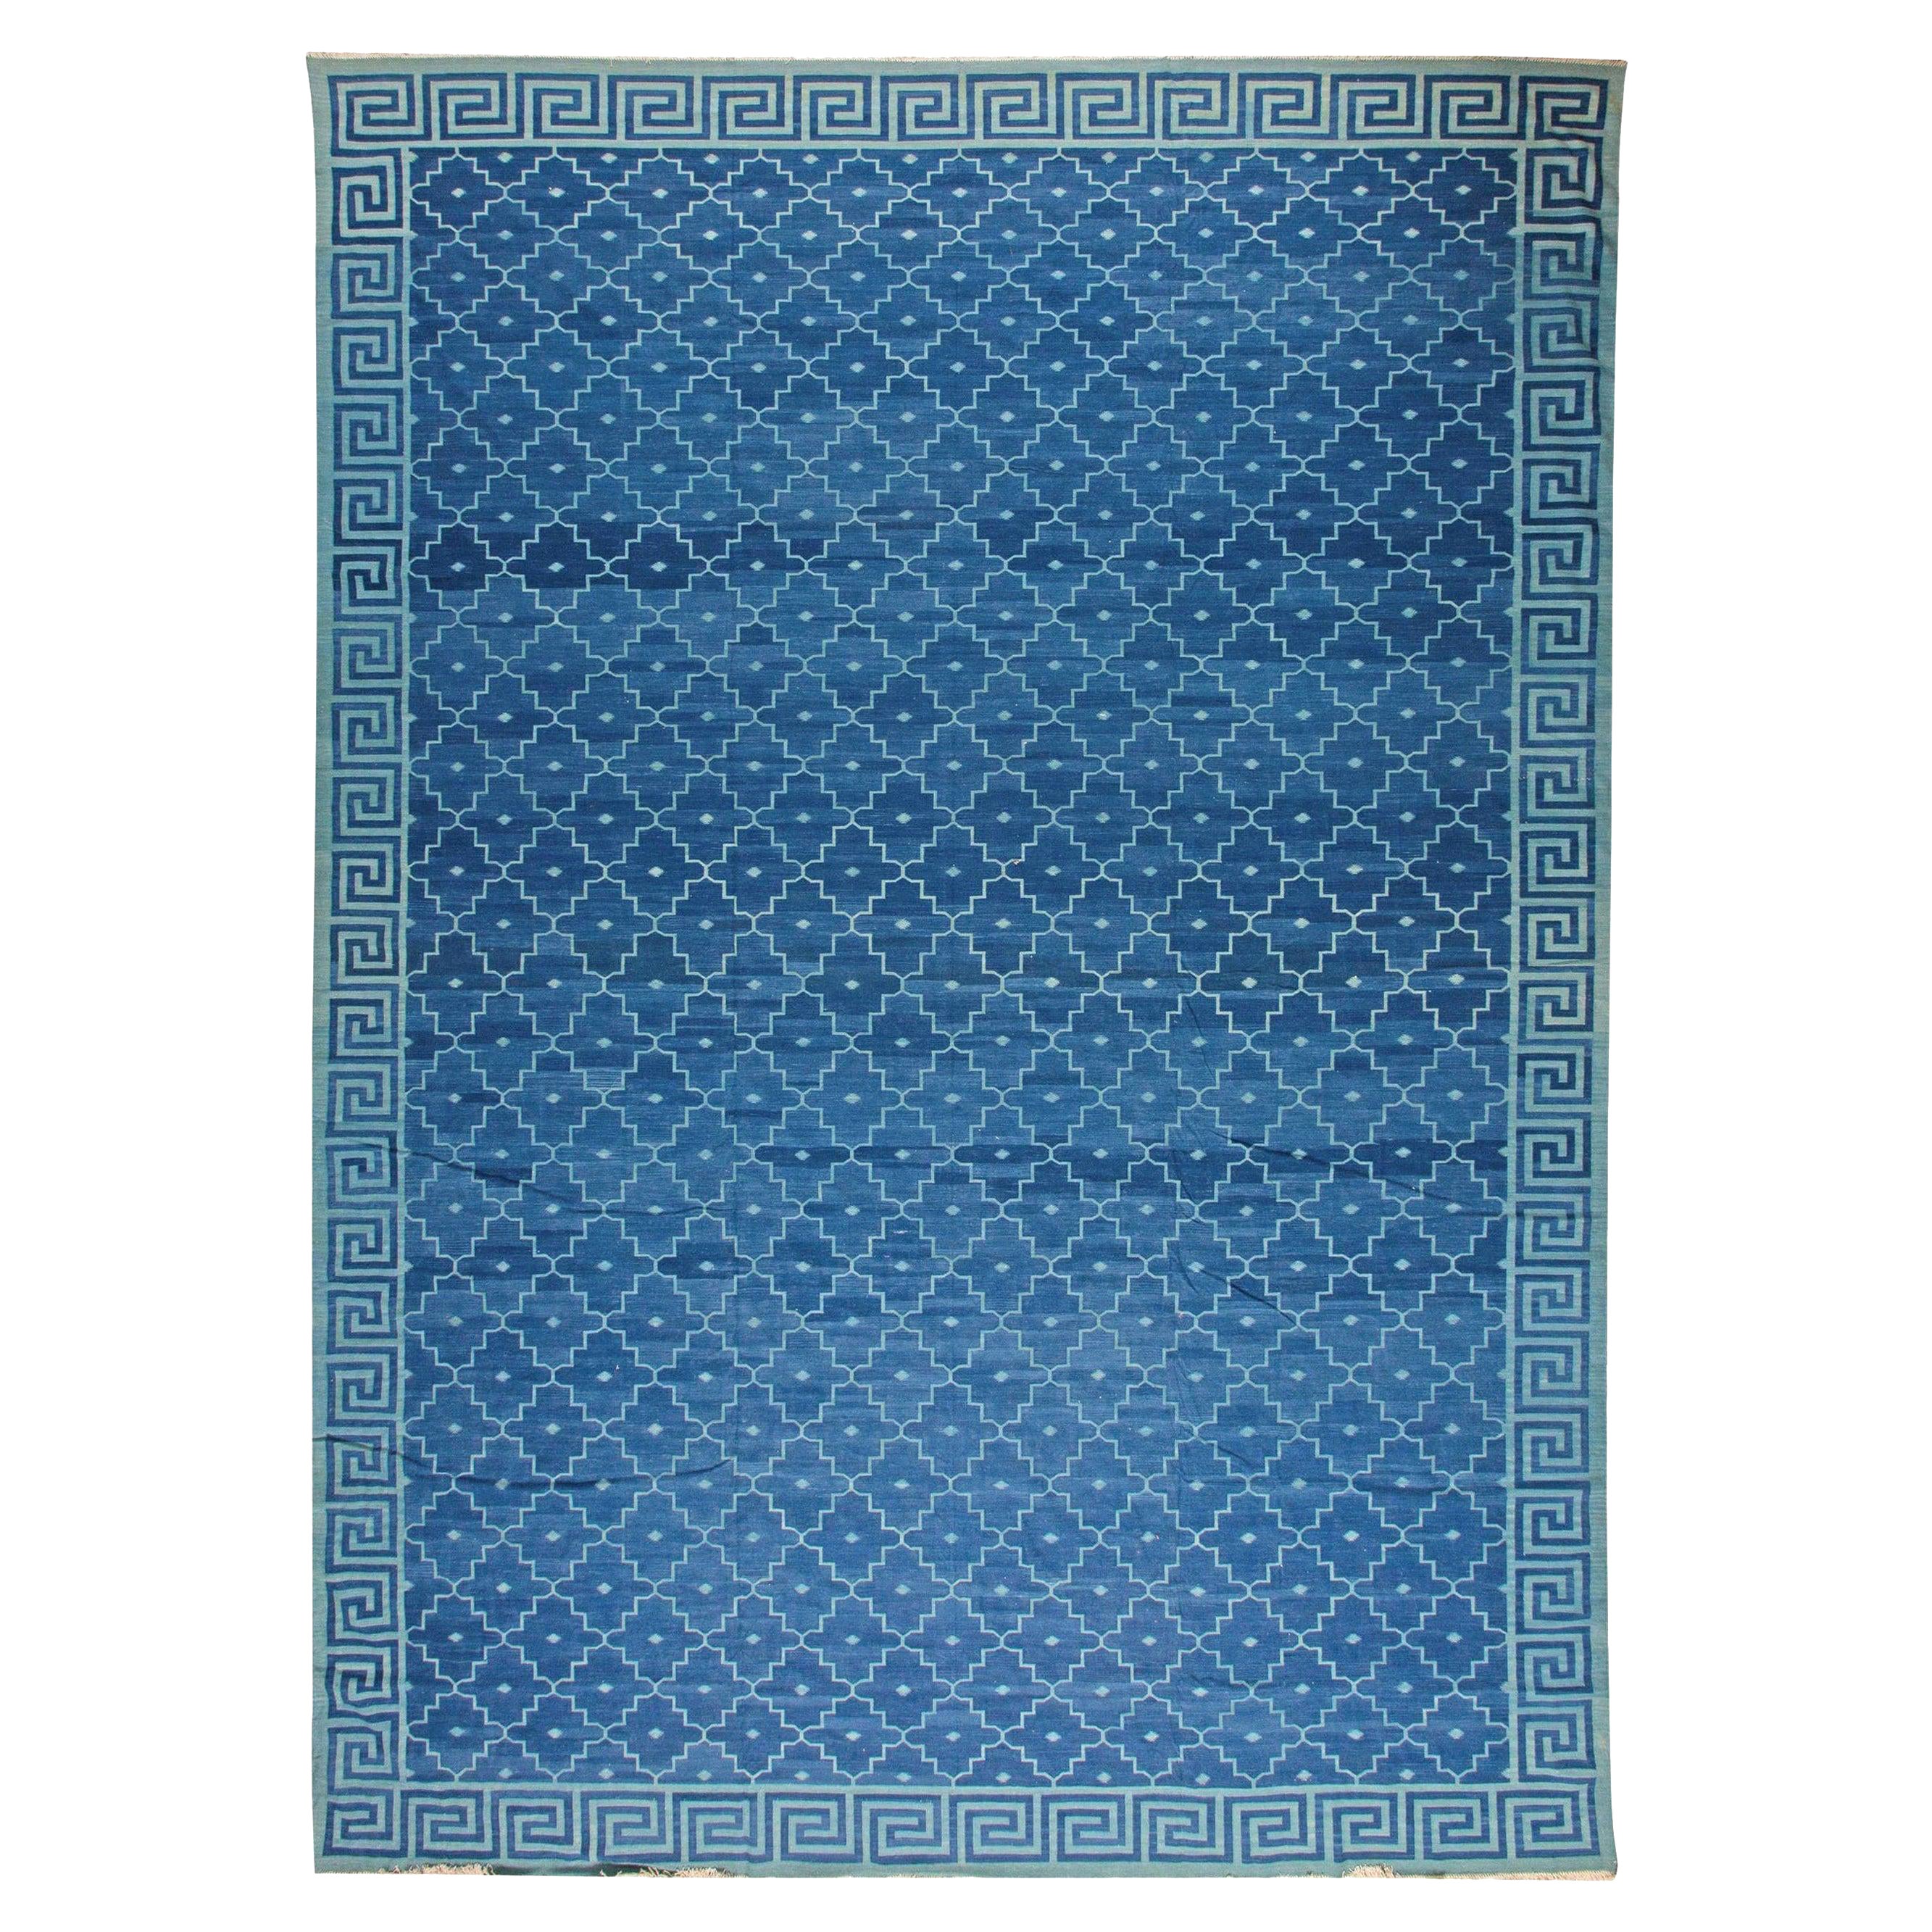 Contemporary Indian Dhurrie Blue Flat-Weave Rug by Doris Leslie Blau